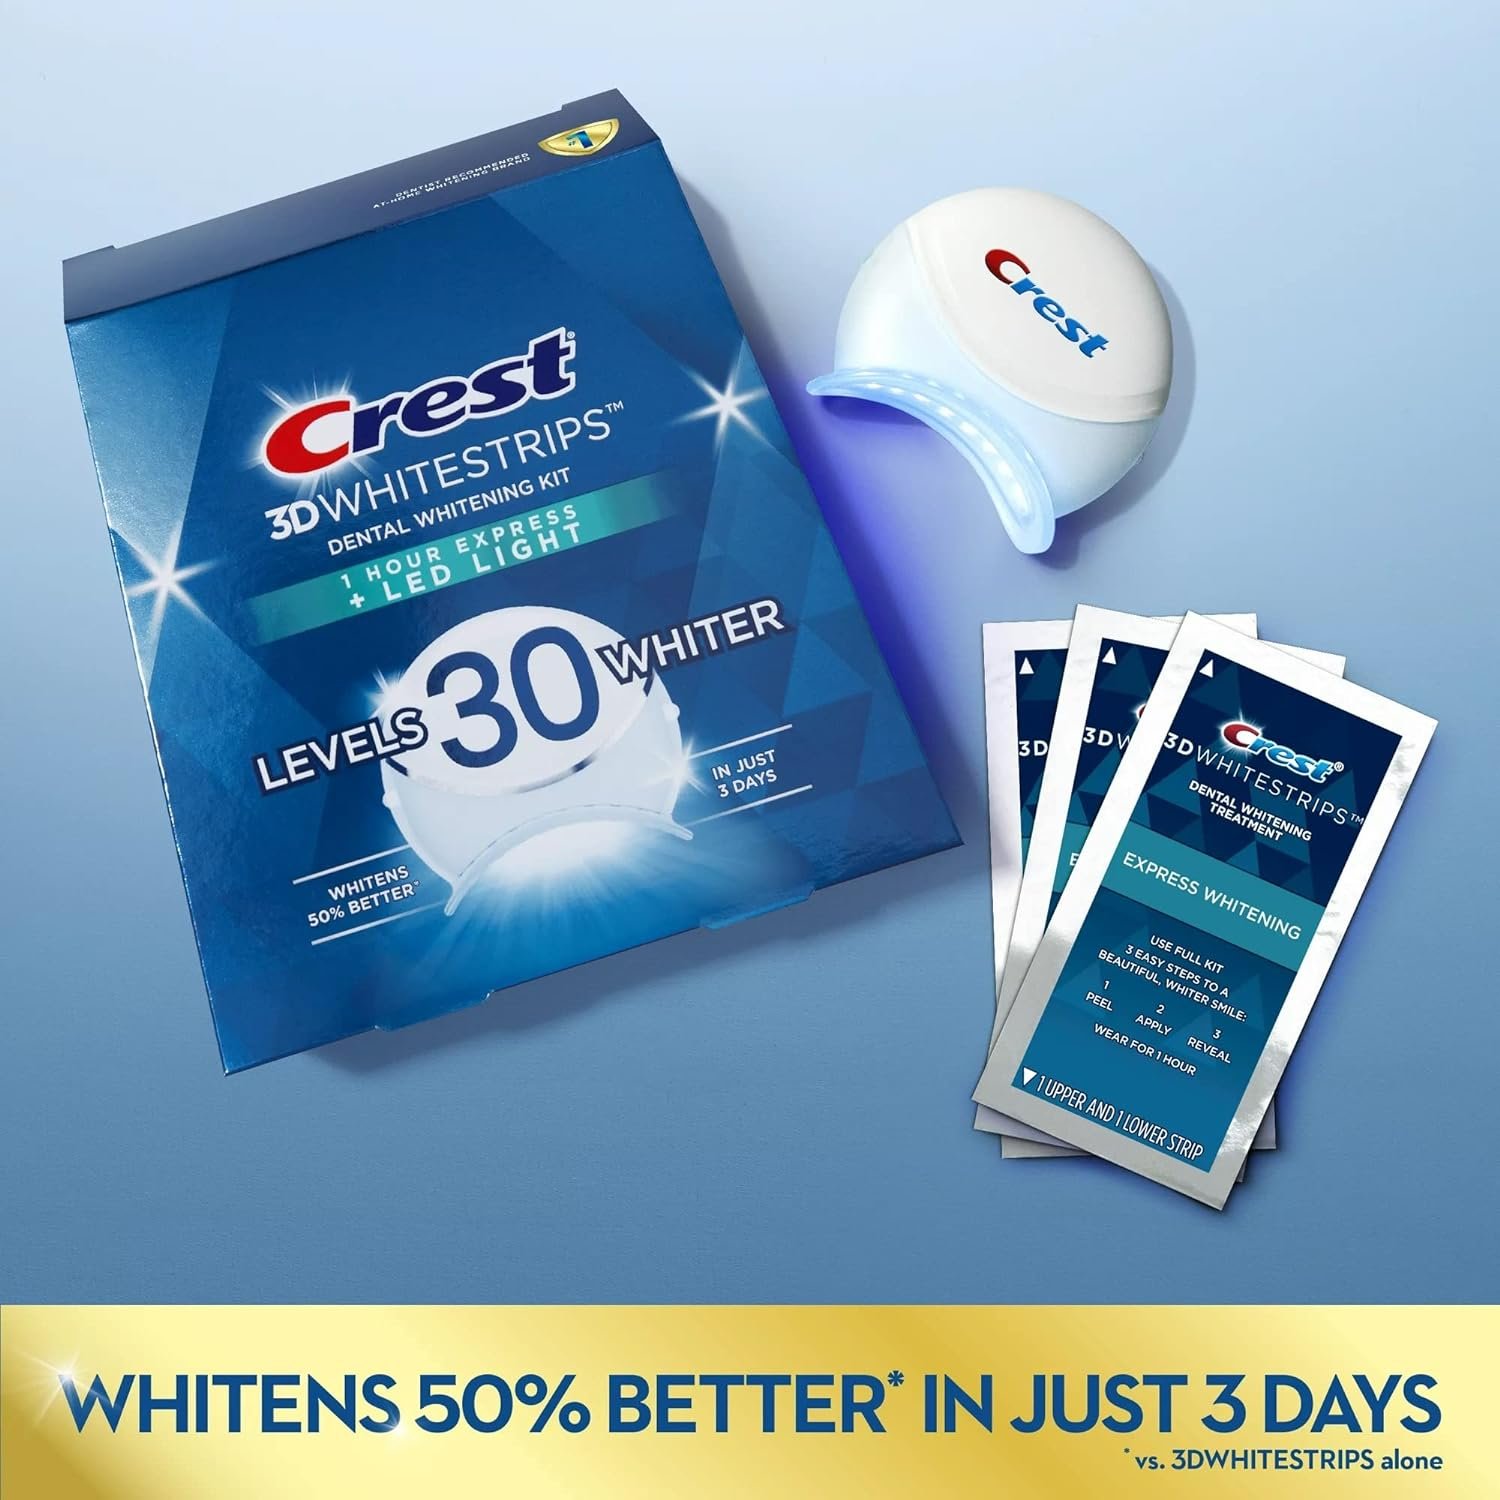 Crest 3DWhitestrips 1 Hour Express + LED Light Teeth Whitening Kit, 19 Treatments